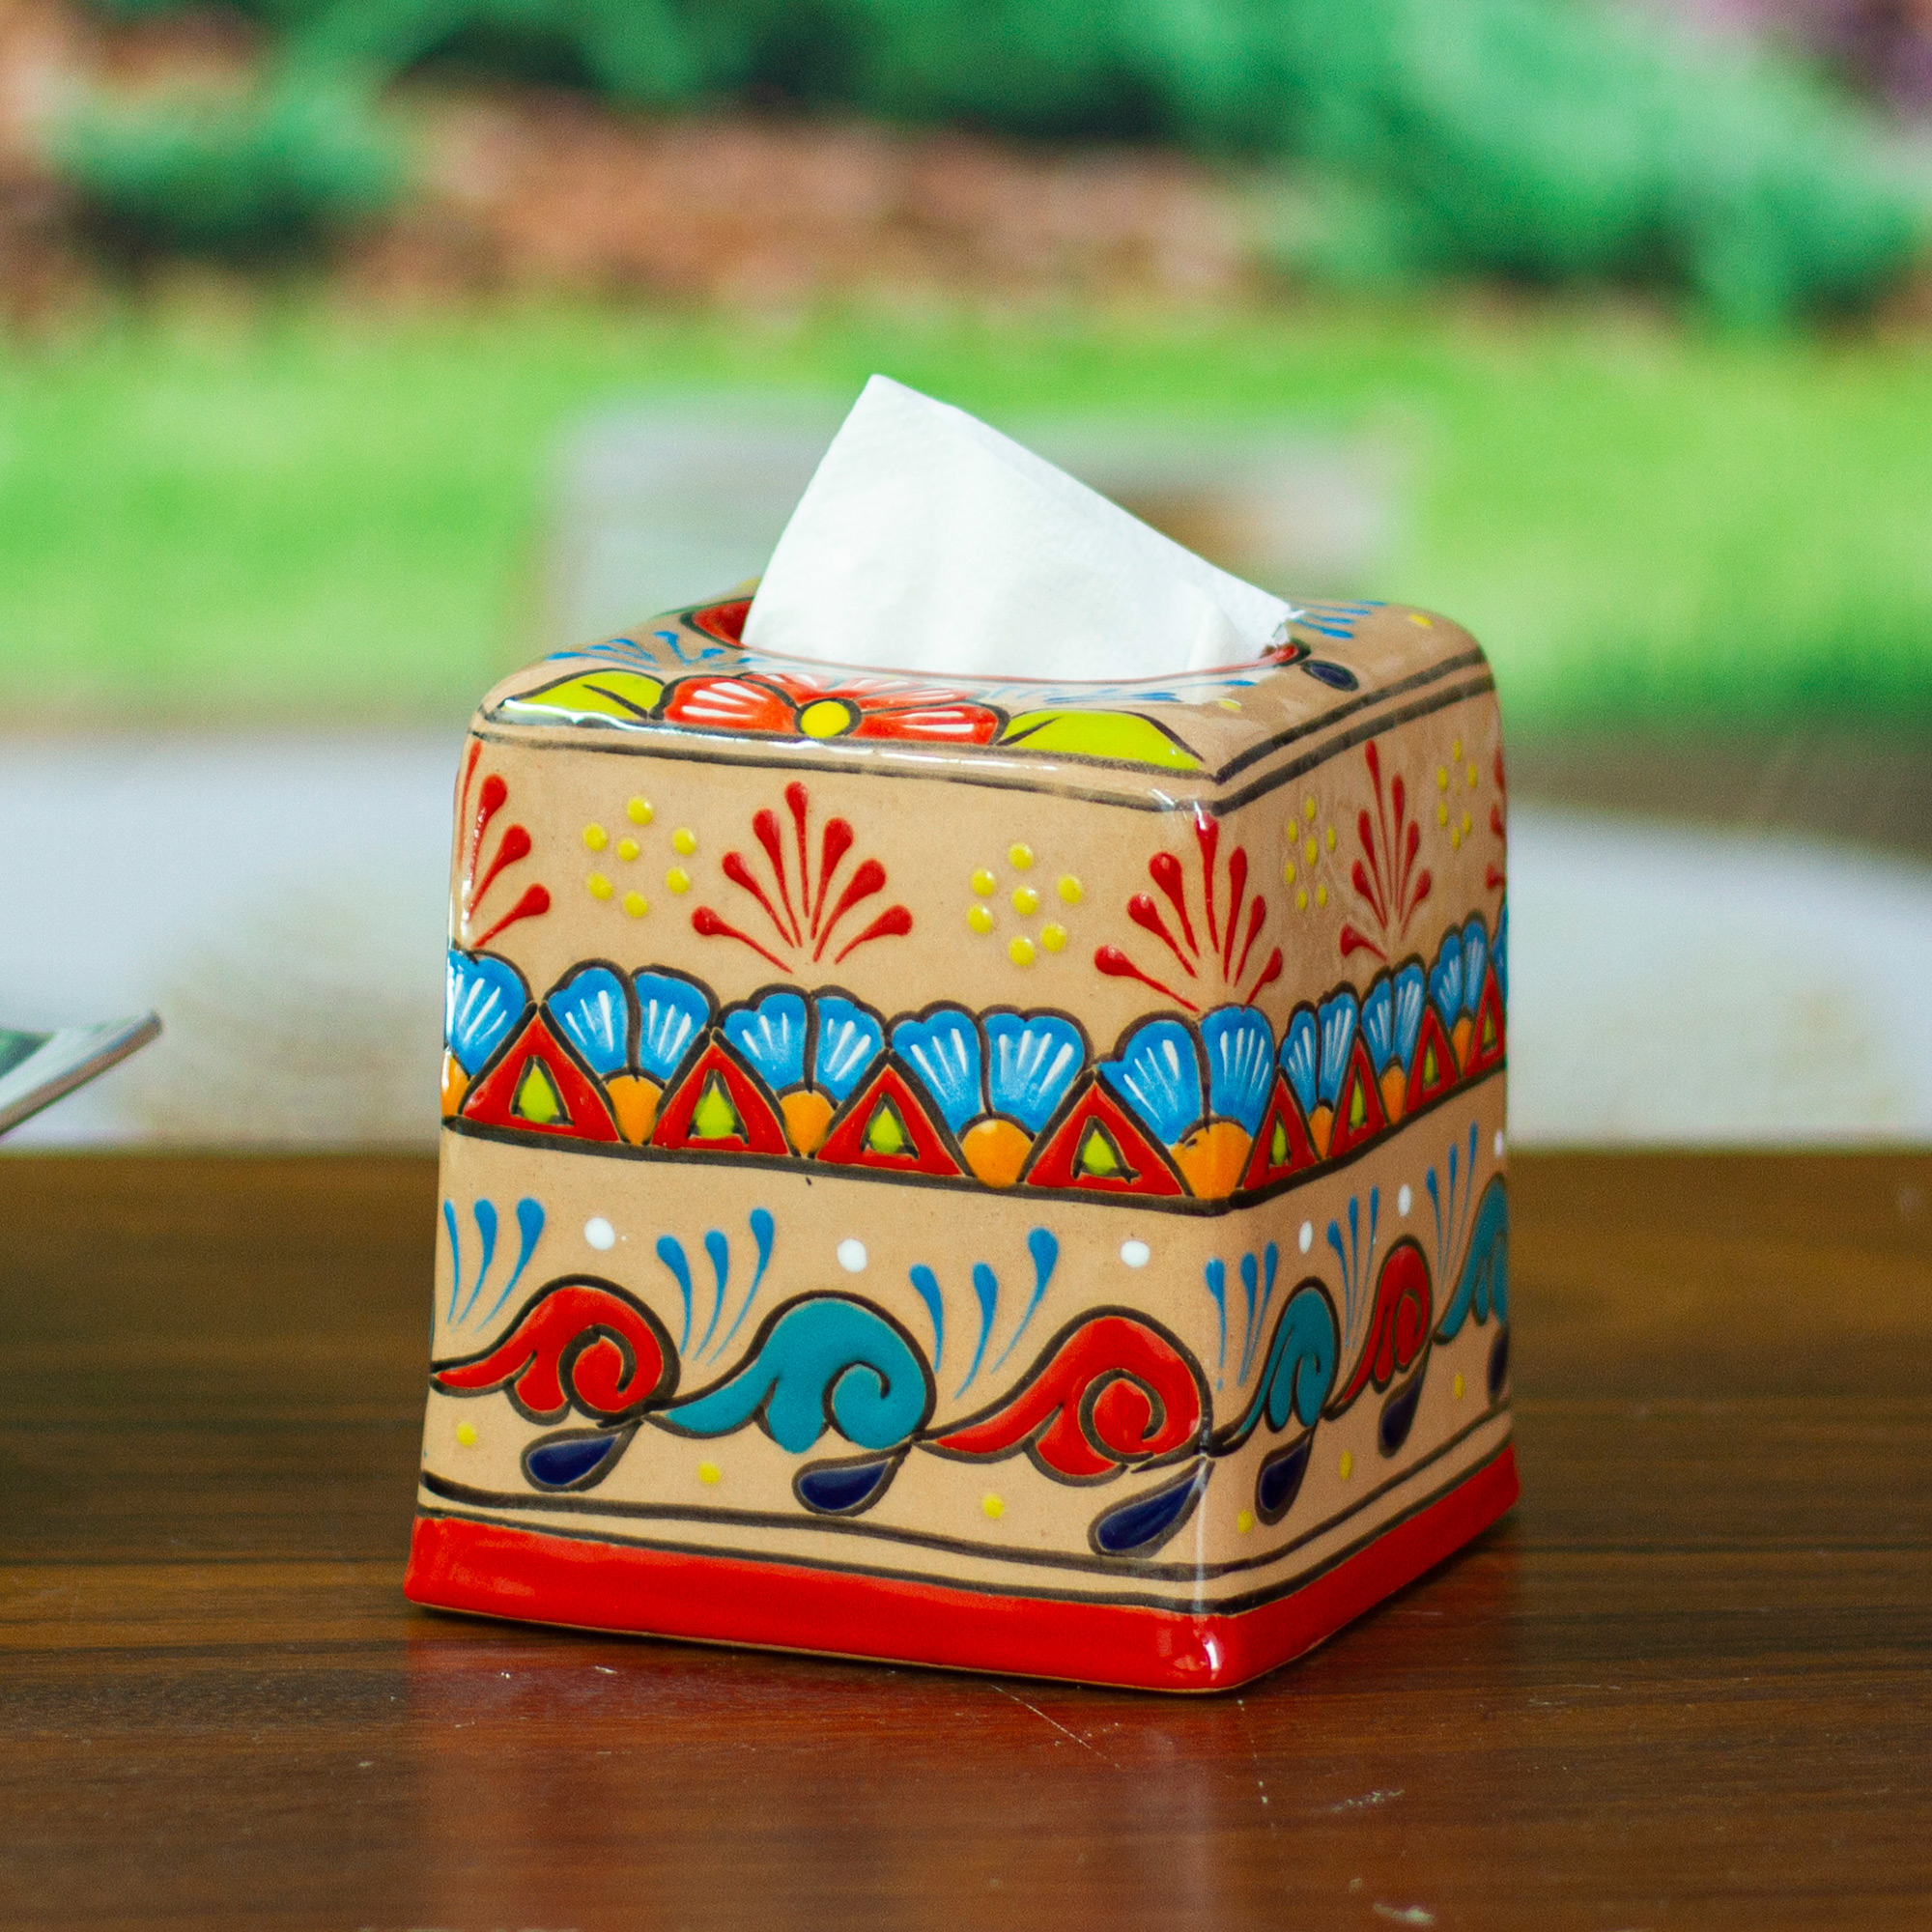 Handcrafted Talavera Floral Ceramic Tissue Box Cover - Spring Convenience